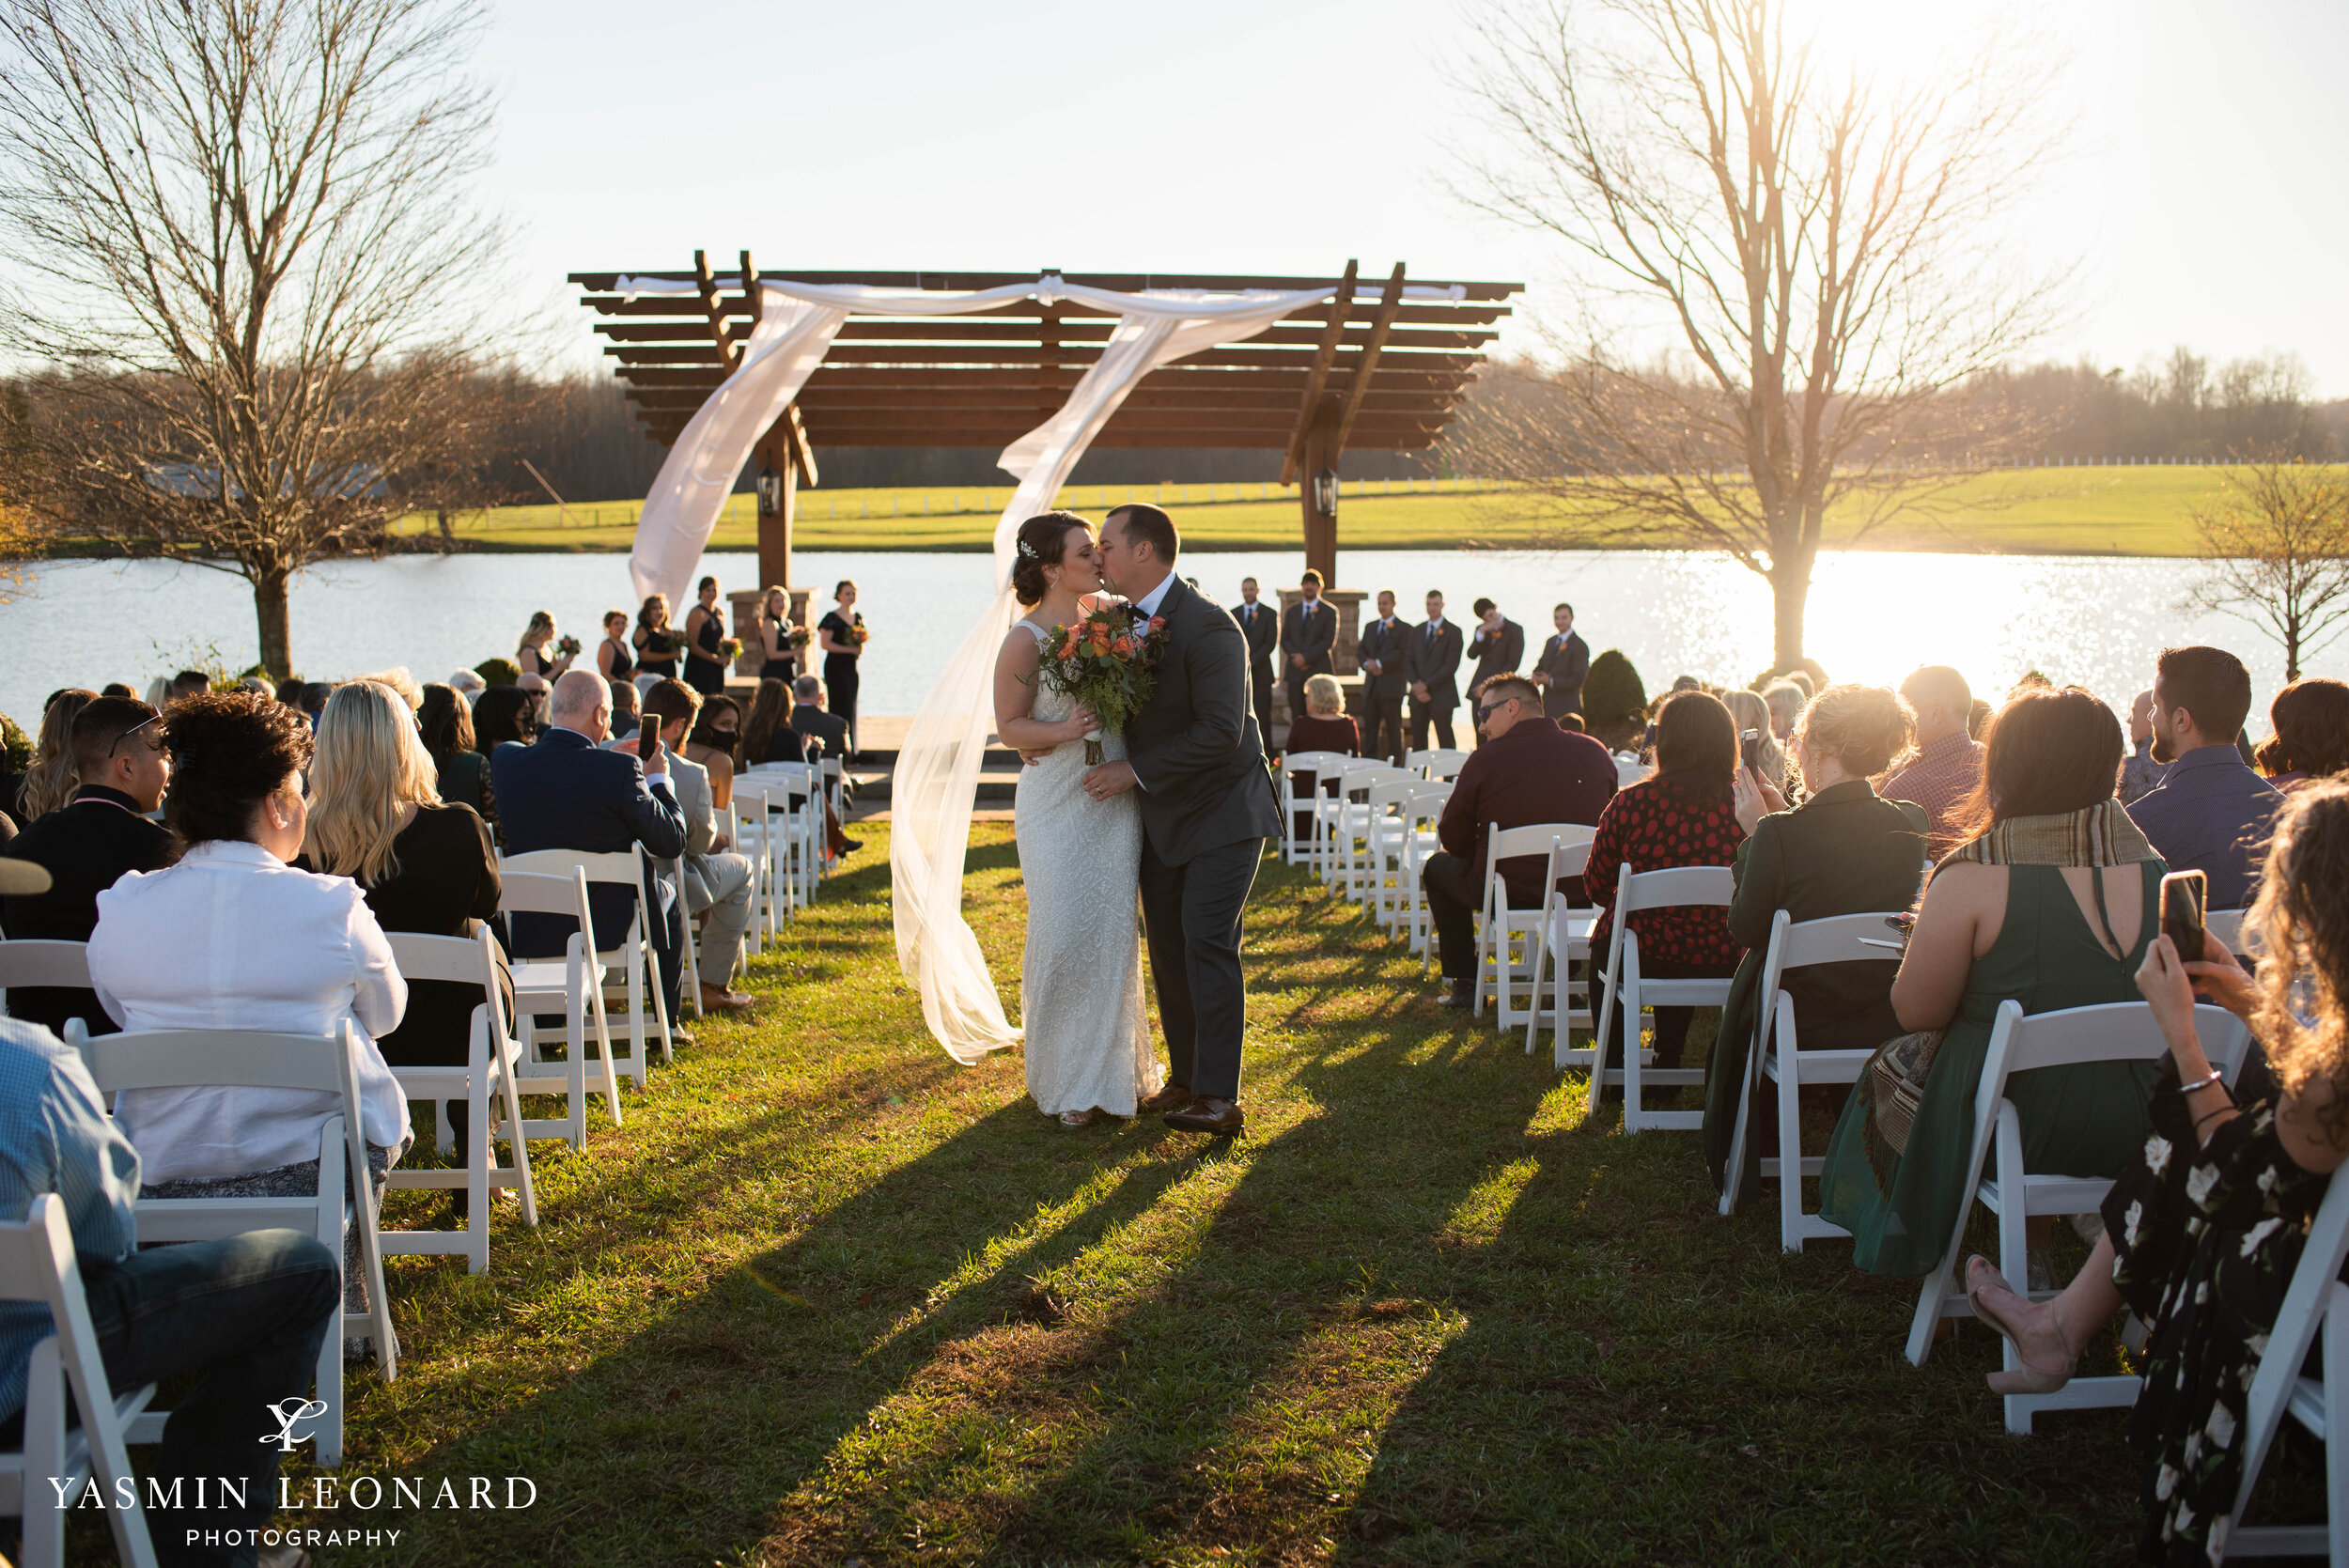 Jared and Katy - Adaumont Farms - High Point Weddings - NC Barn Weddings - Yasmin Leonard Photography-26.jpg